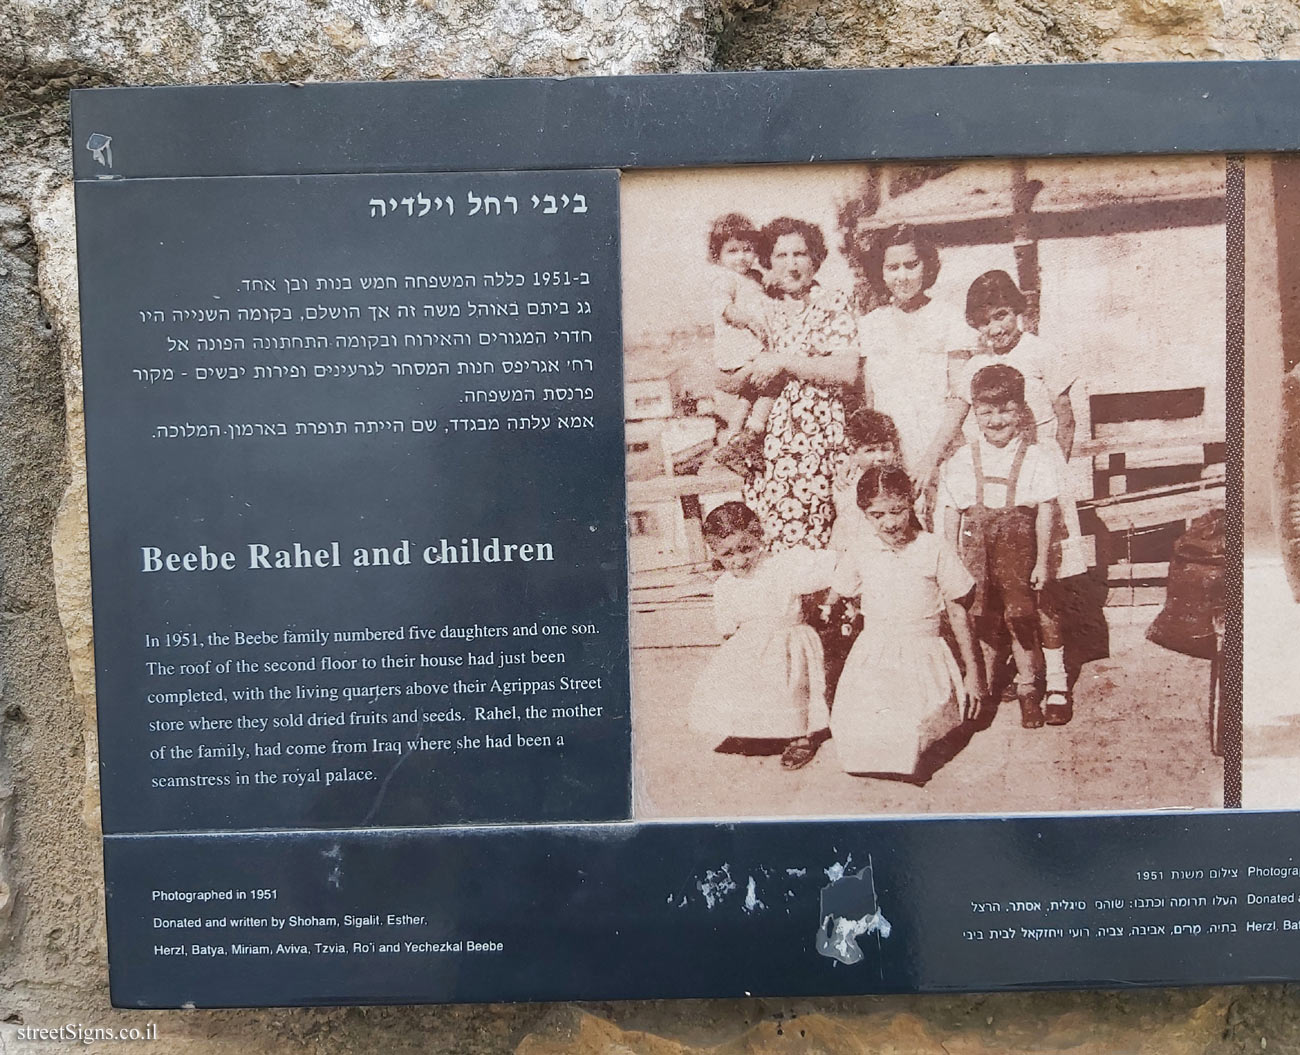 Jerusalem - Photograph in stone - Ohel Moshe - Beebe Rahel and children